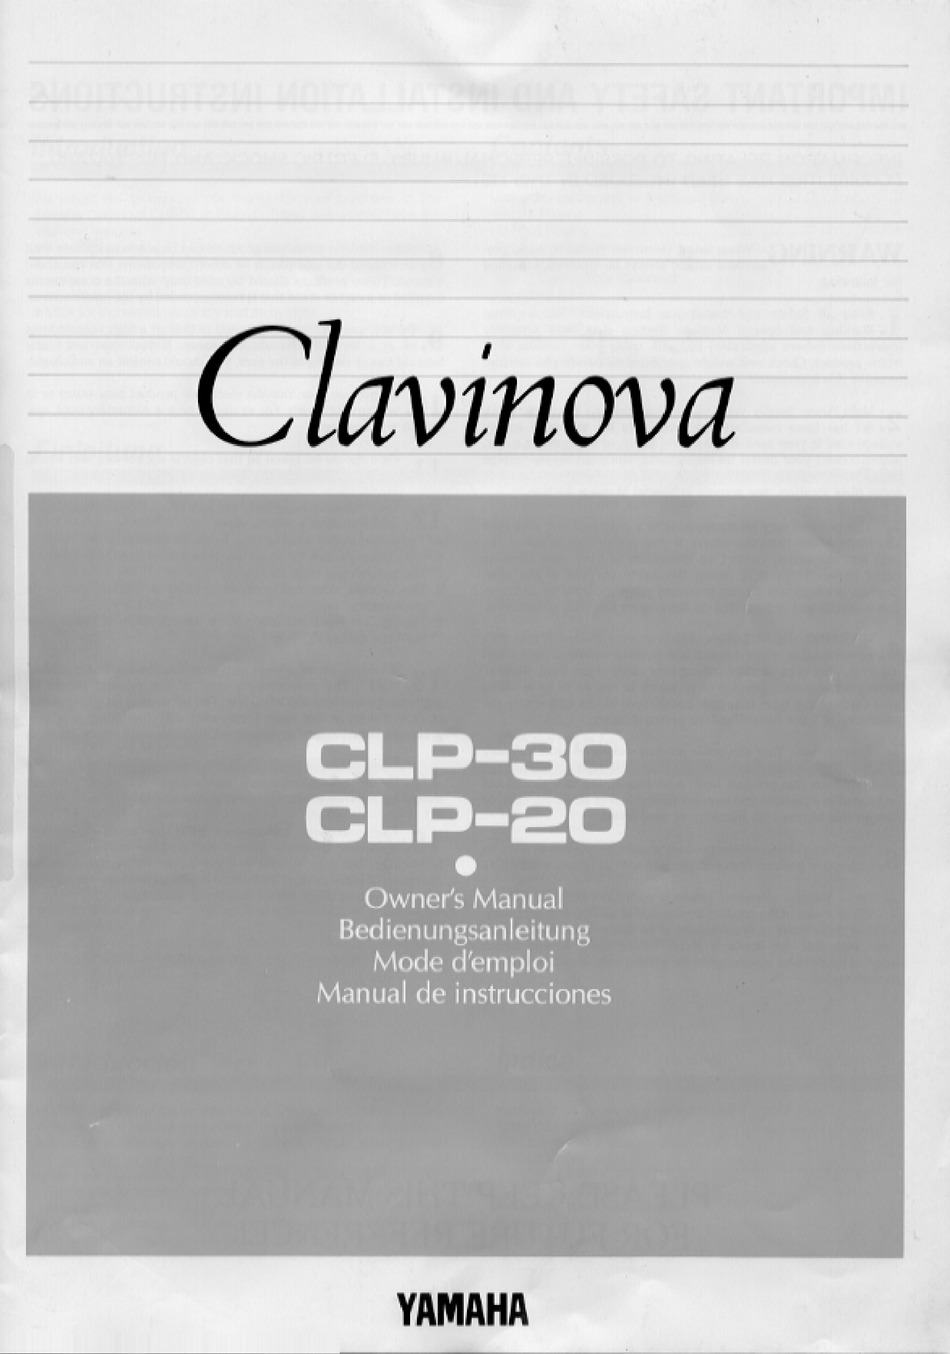 YAMAHA CLAVINOVA CLP-20 BEDIENUNGSANLEITUNG Pdf Download | ManualsLib